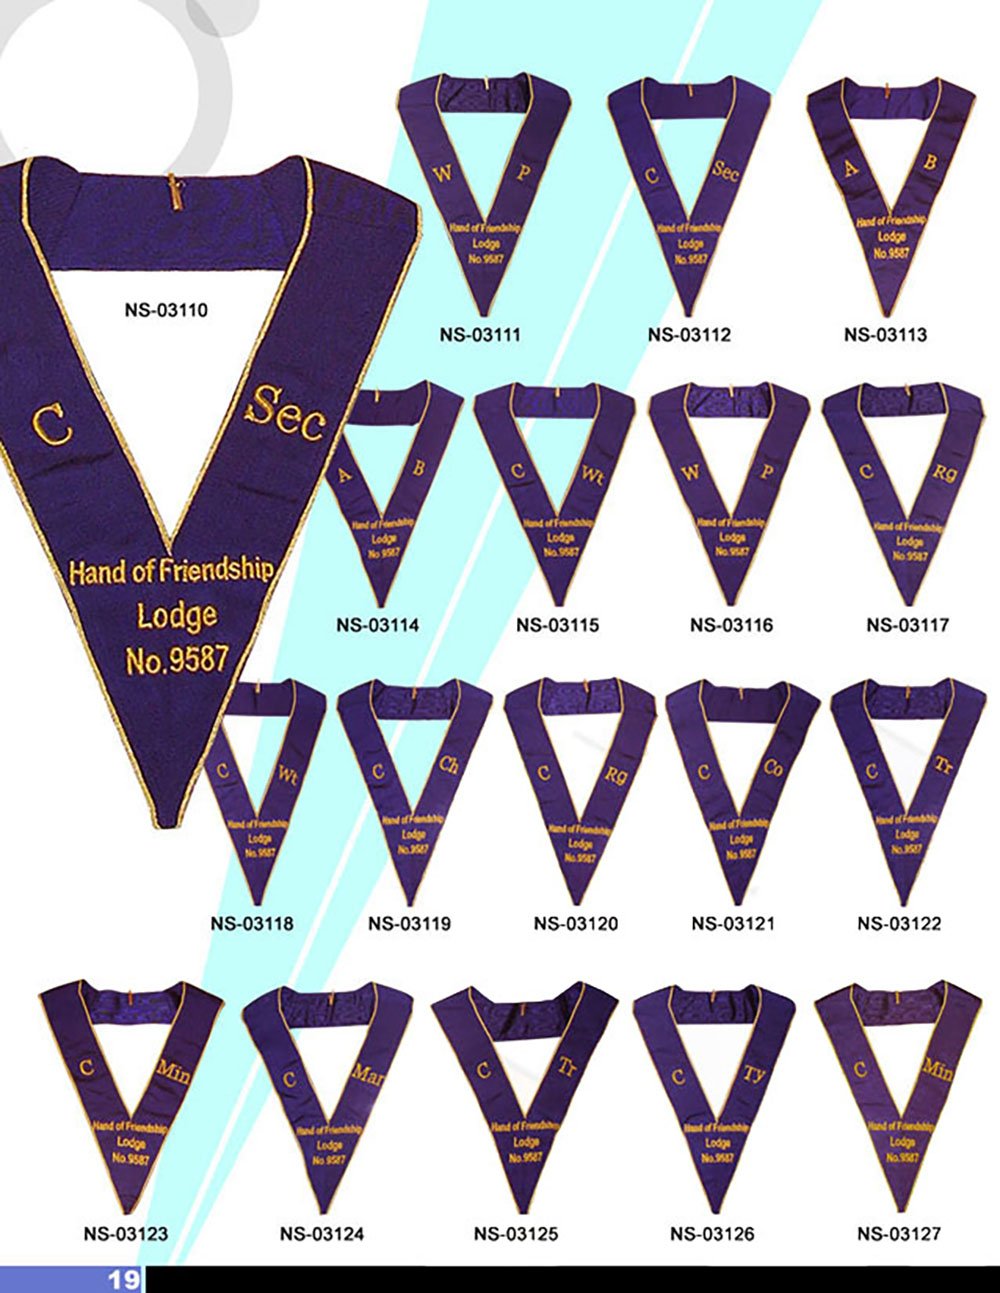 Royal Antediluvian Order of Buffaloes RAOB - Collars - Bricks Masons